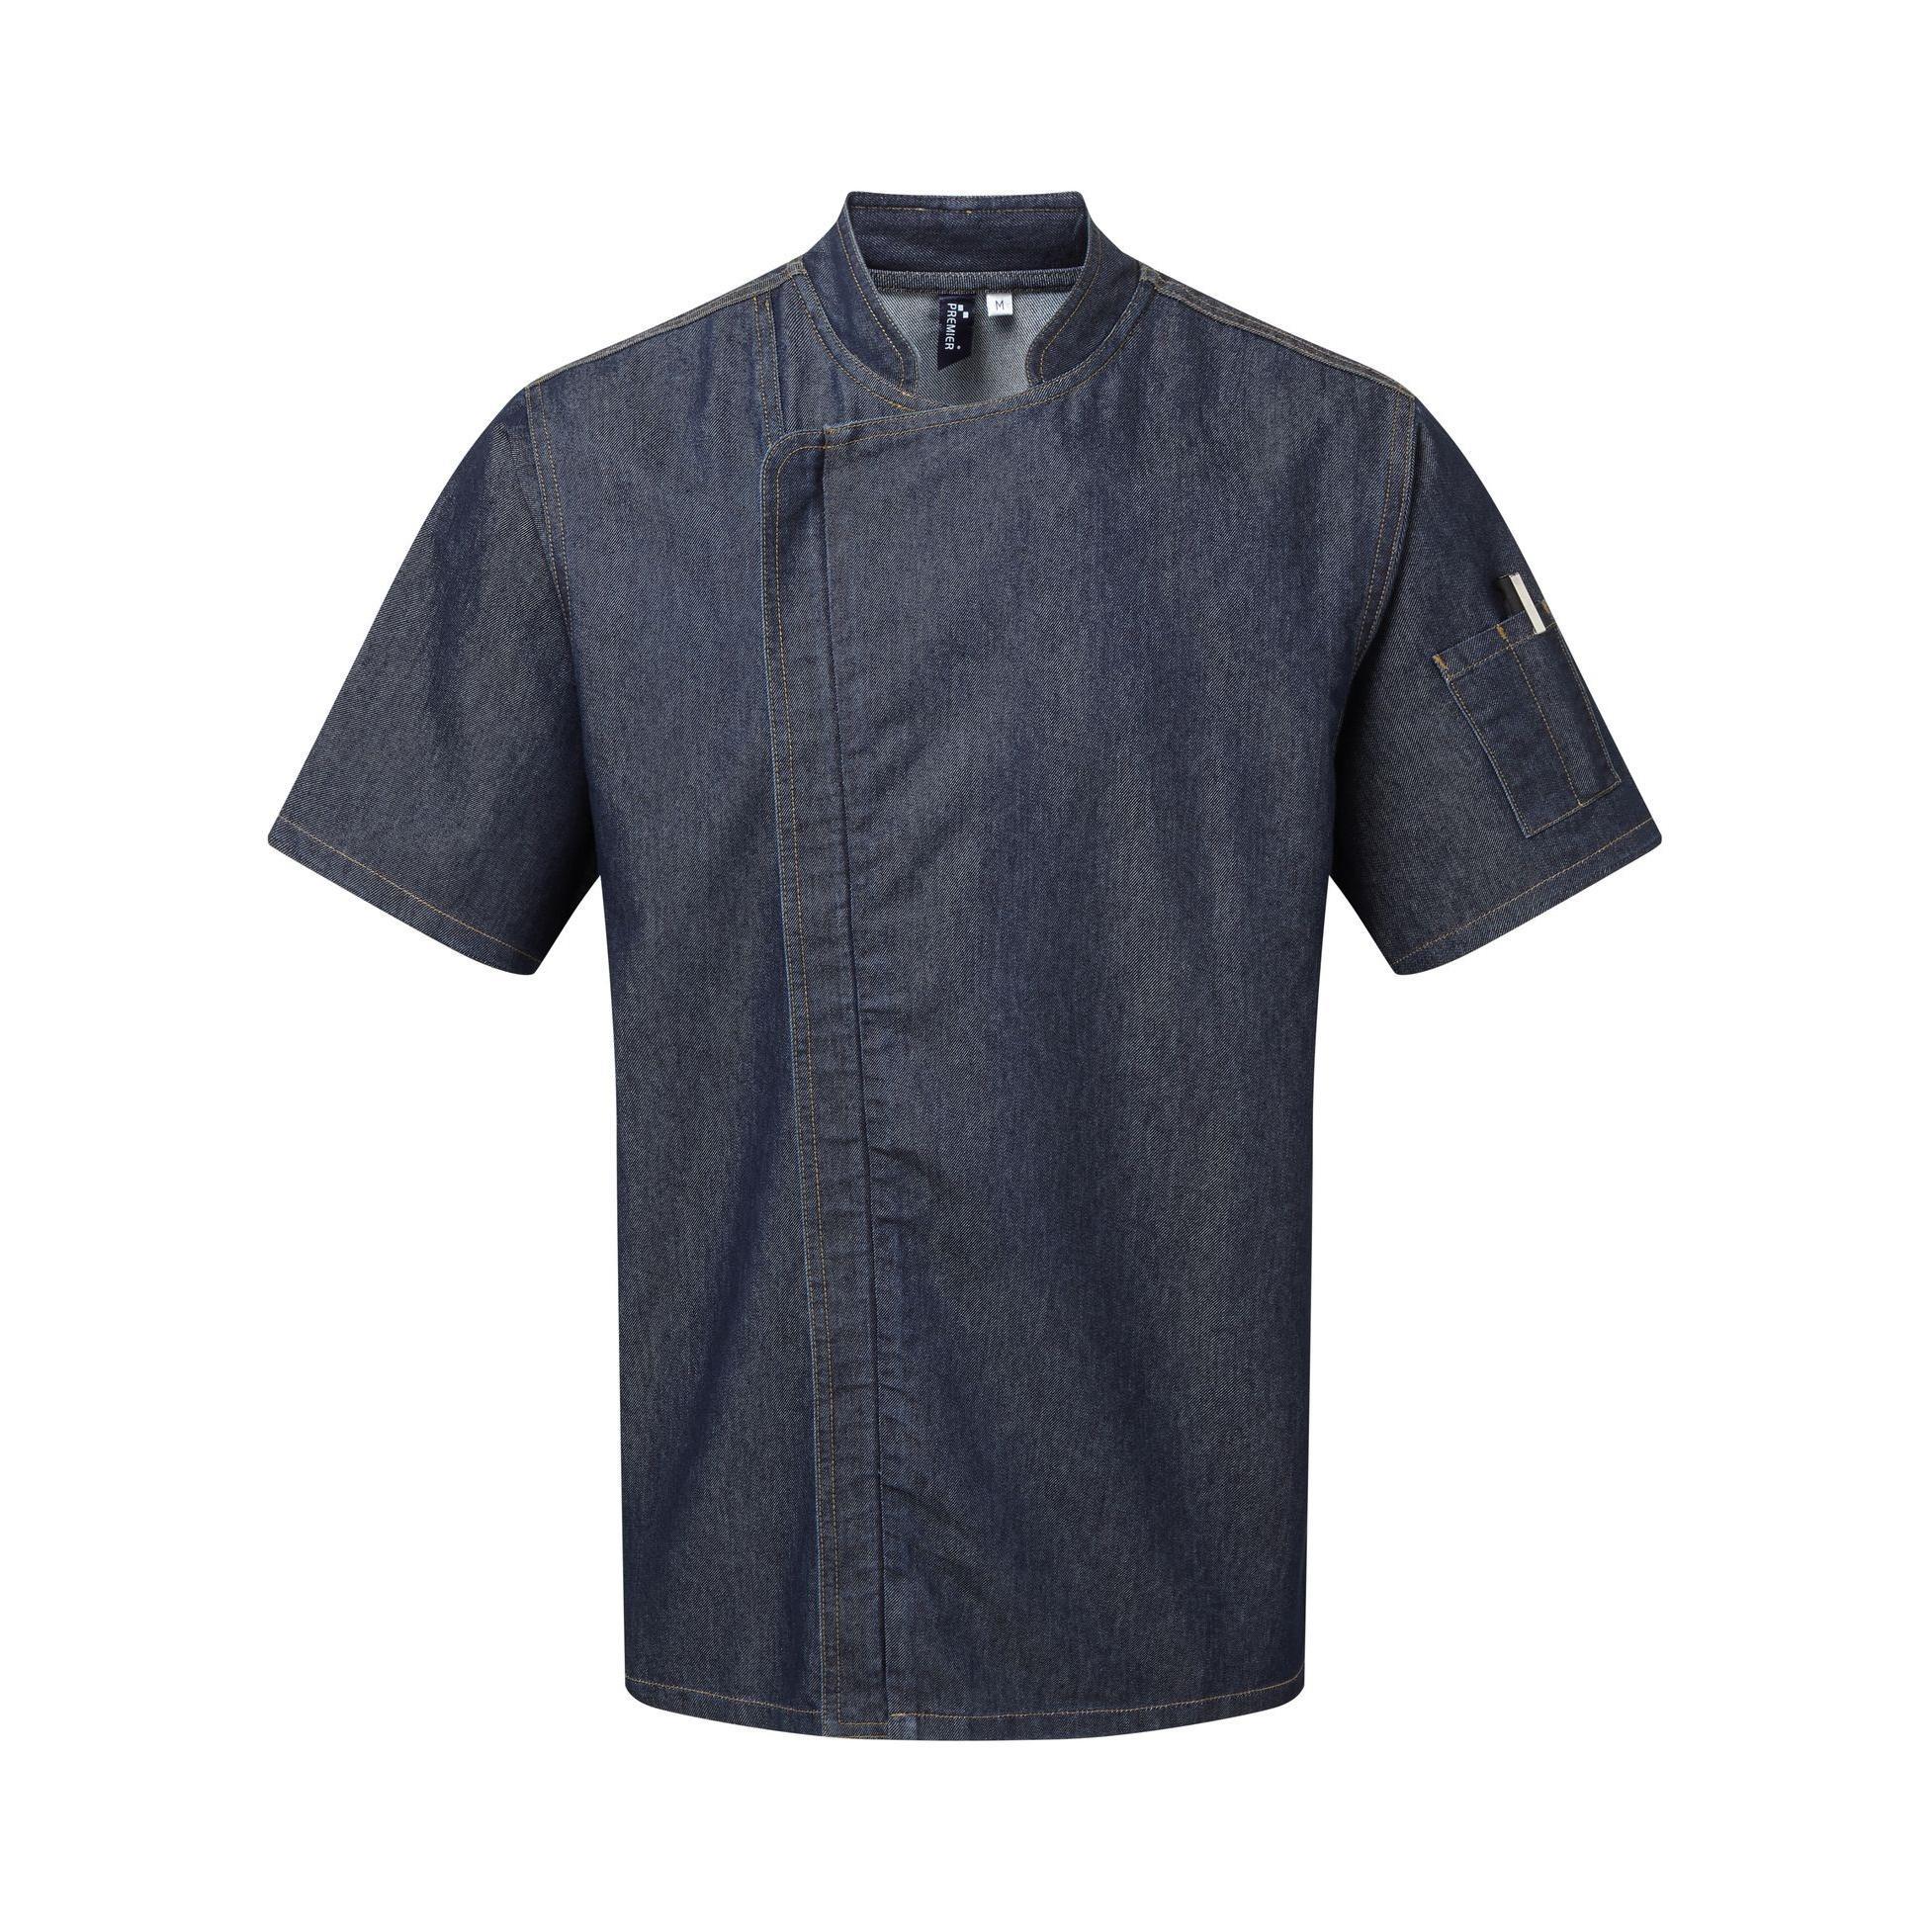 Premier Unisex Adults Chefs Zip-Close Short Sleeve Jacket (Indigo Denim) (XS)